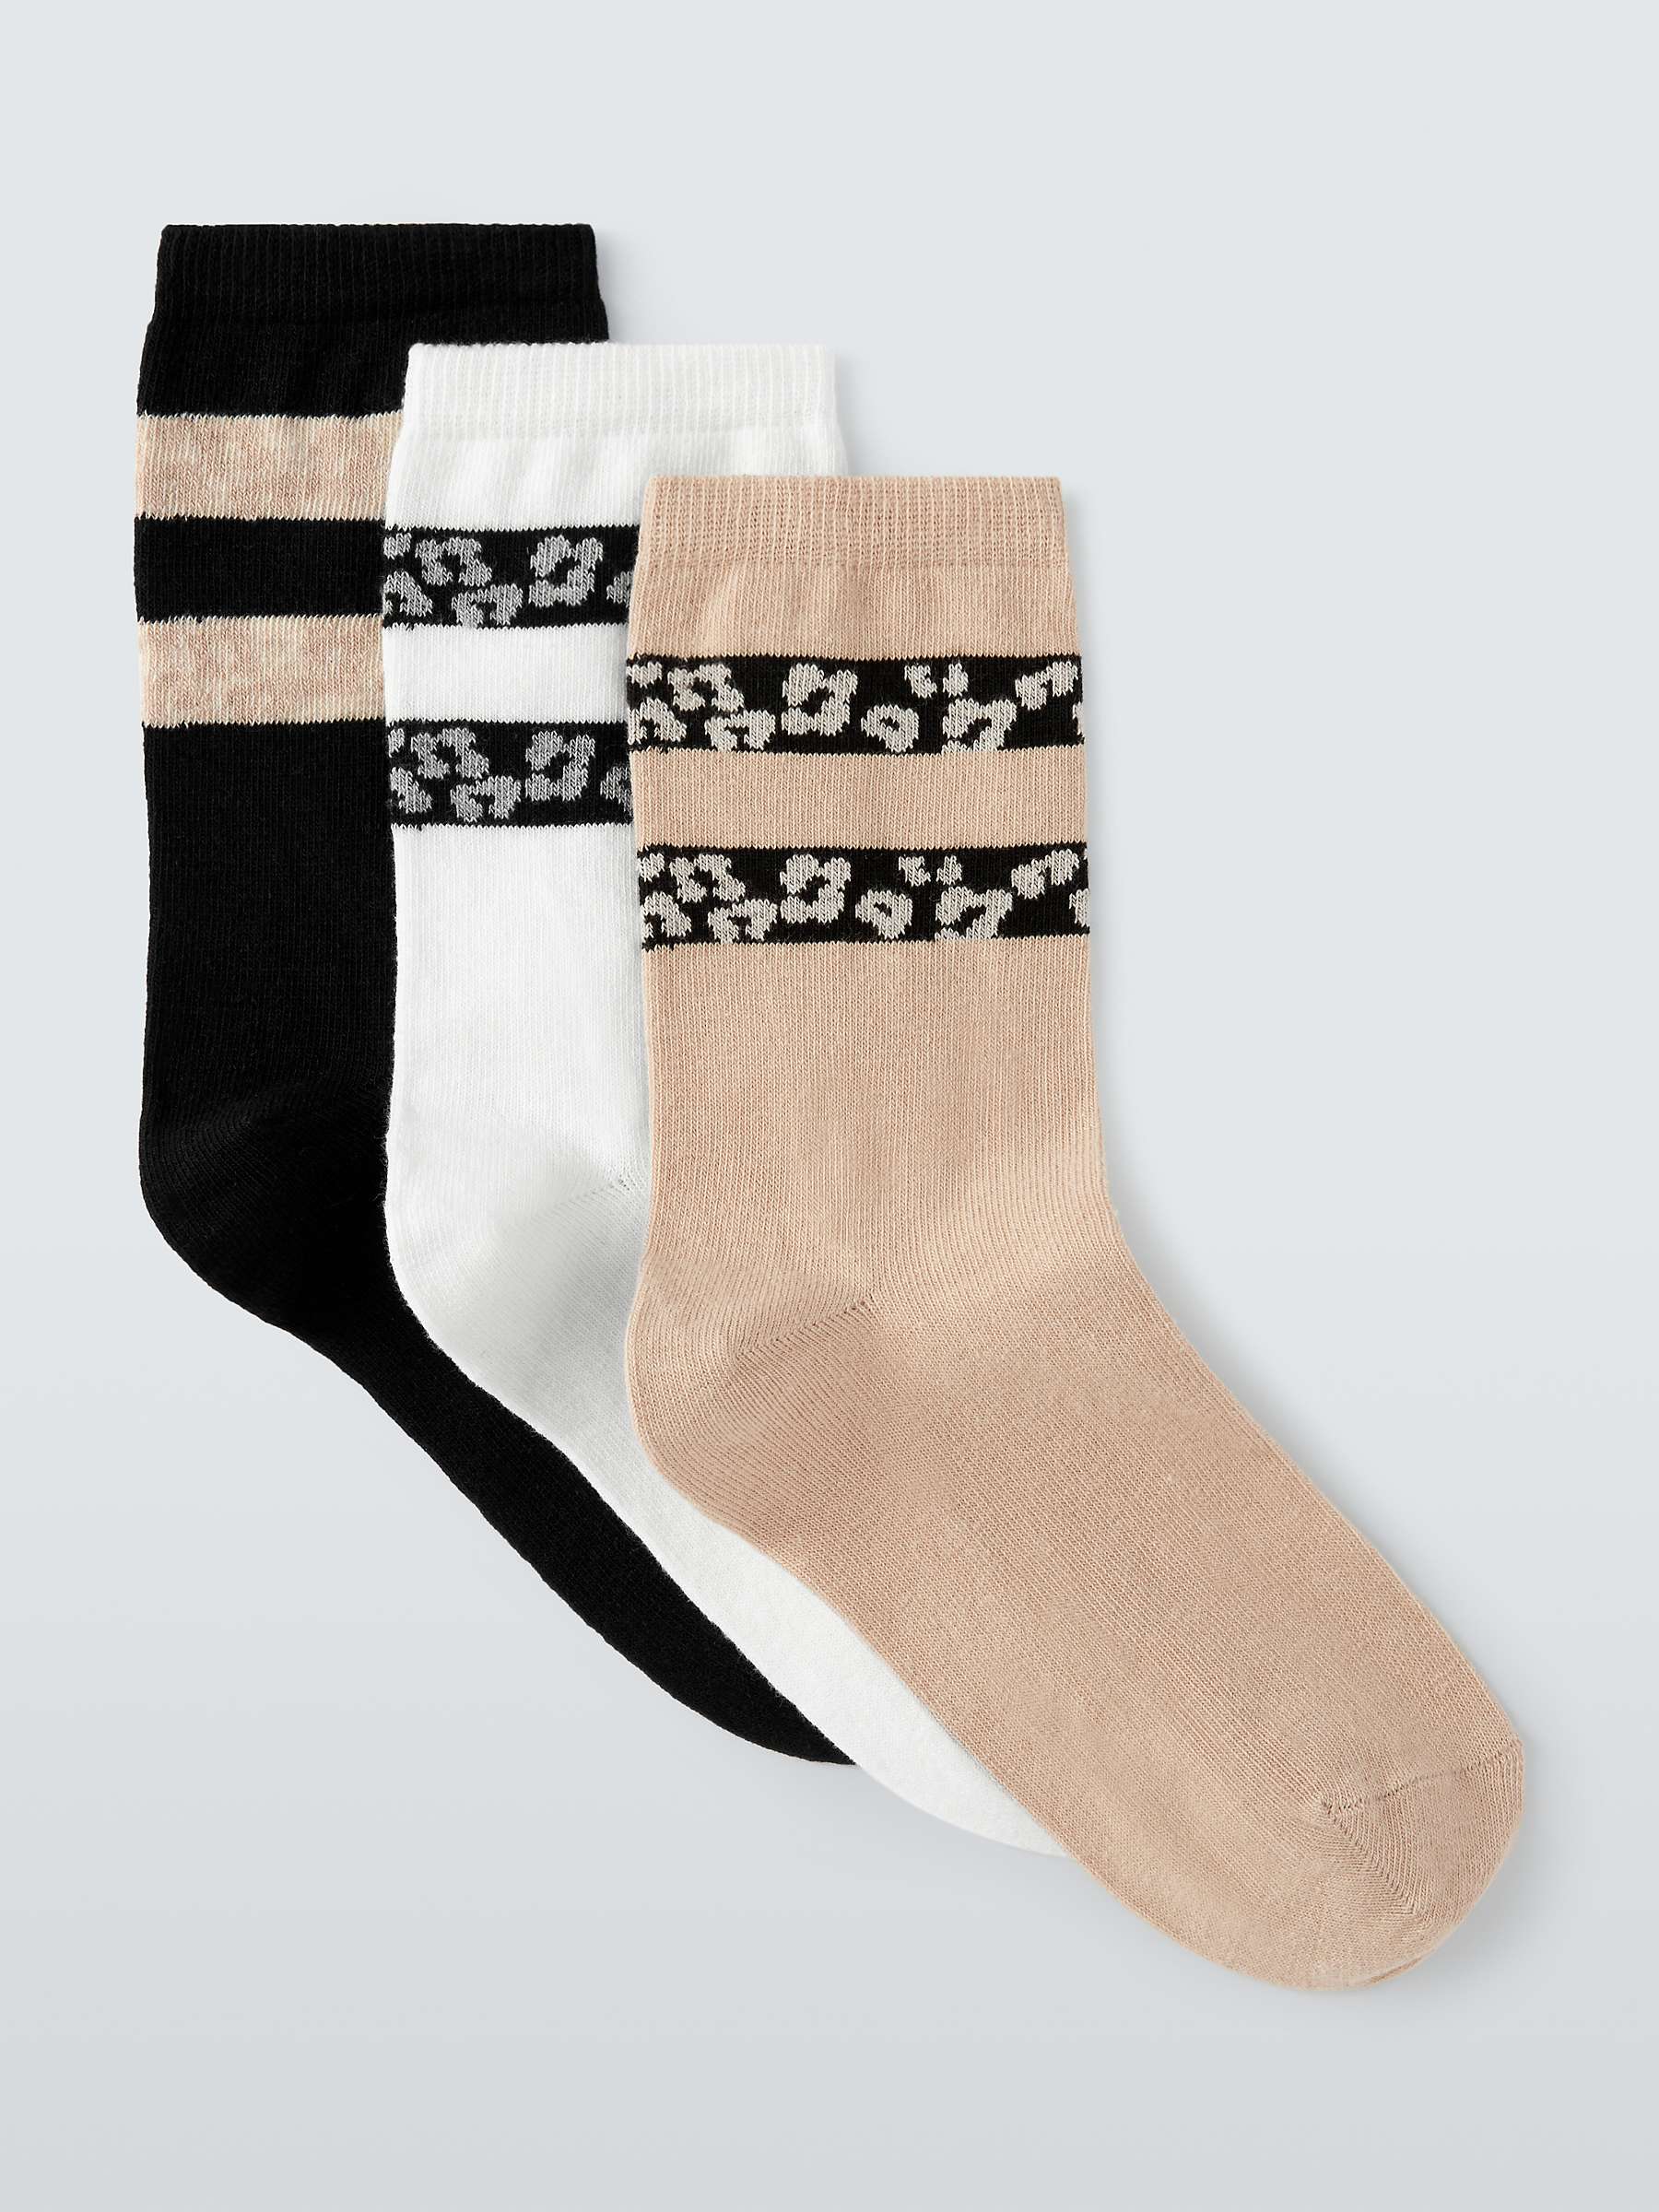 Buy John Lewis Animal Spot Print Ankle Socks, Pack of 3, Natural/Multi Online at johnlewis.com